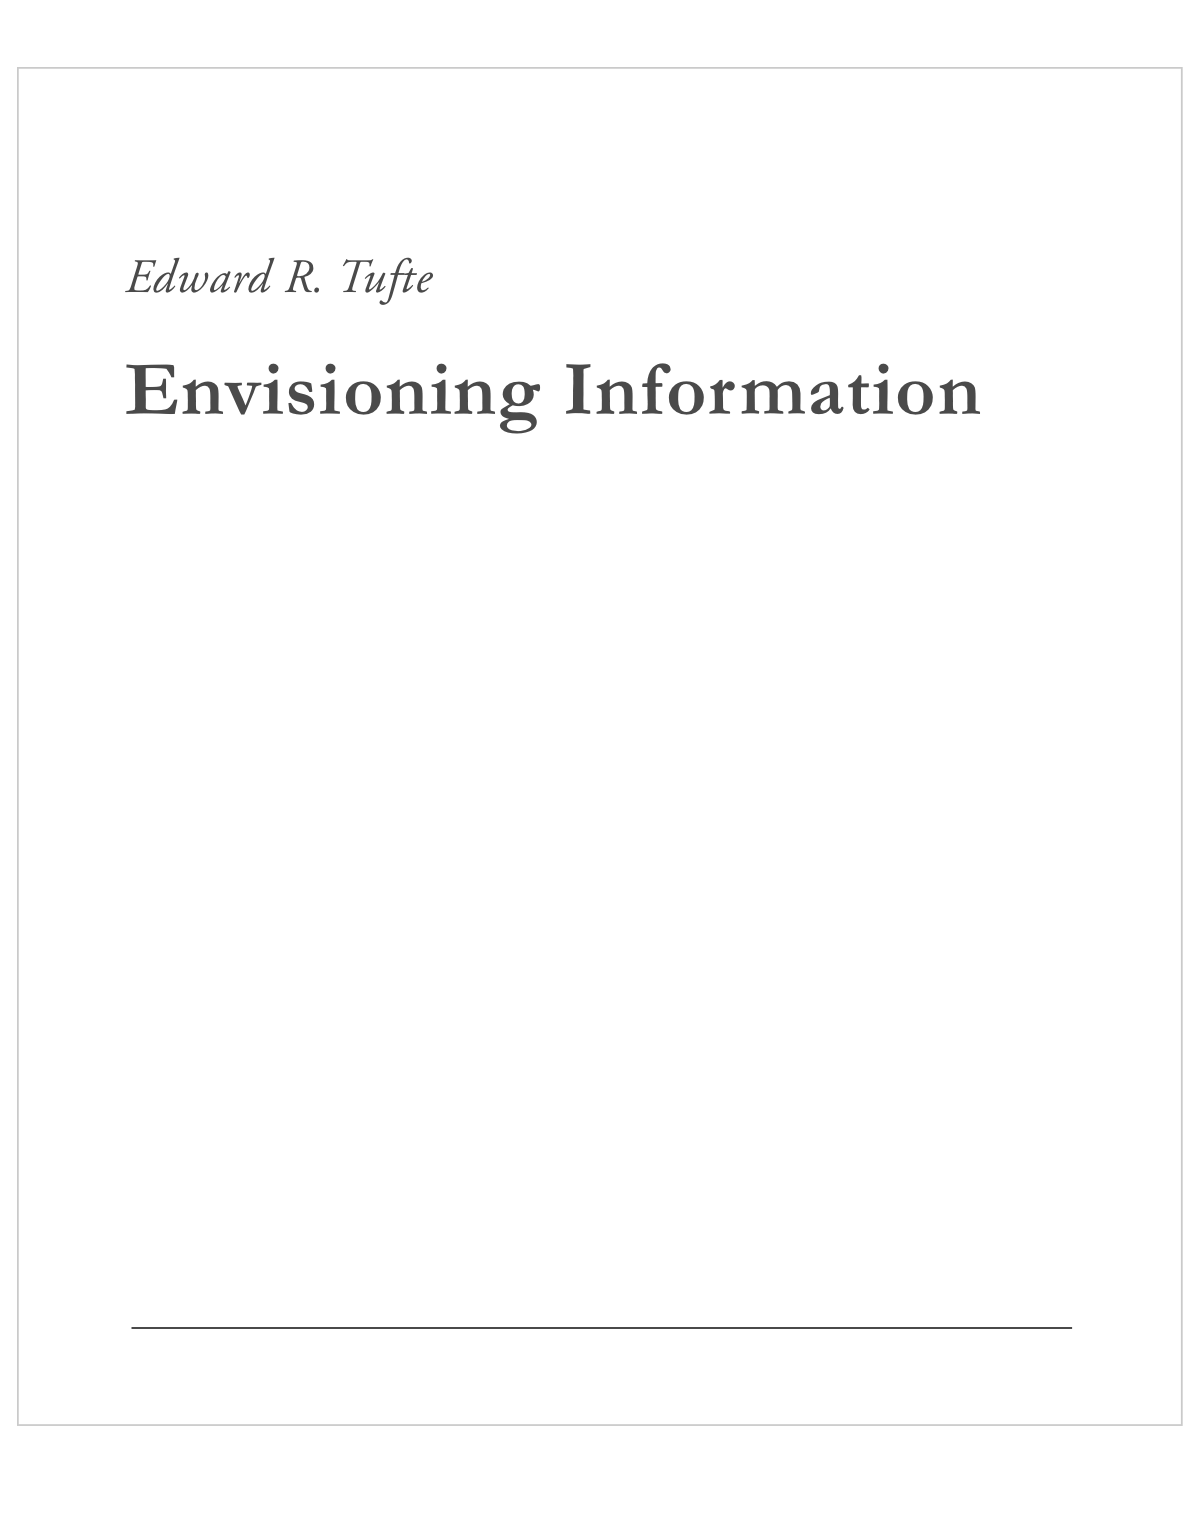 Edward Tufte; Envisioning Information